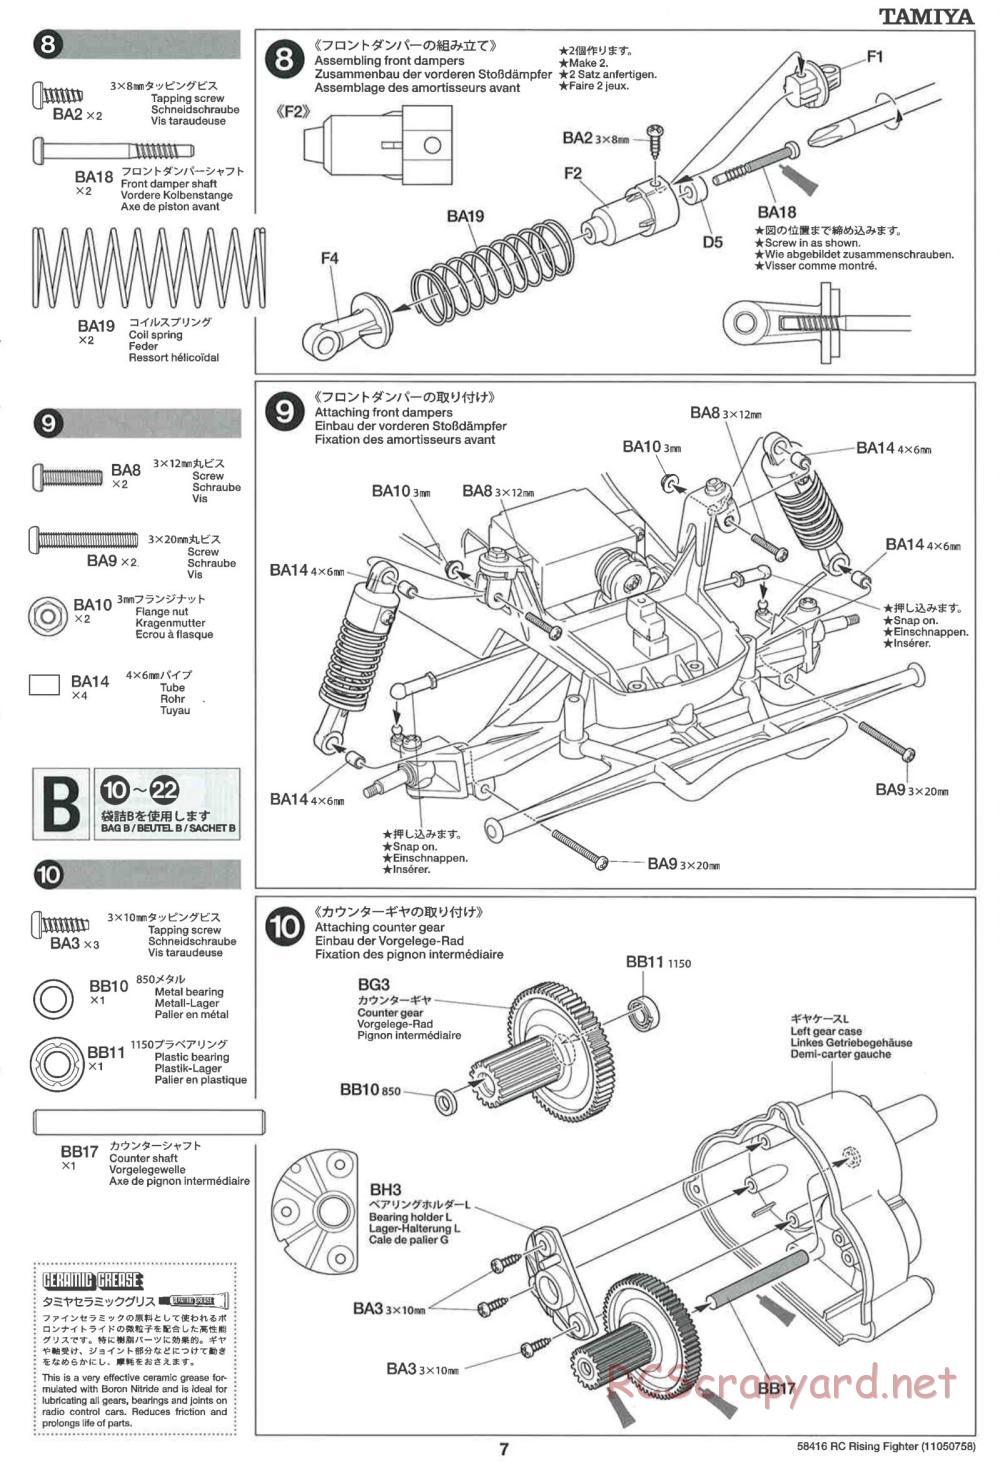 Tamiya - Rising Fighter Chassis - Manual - Page 7